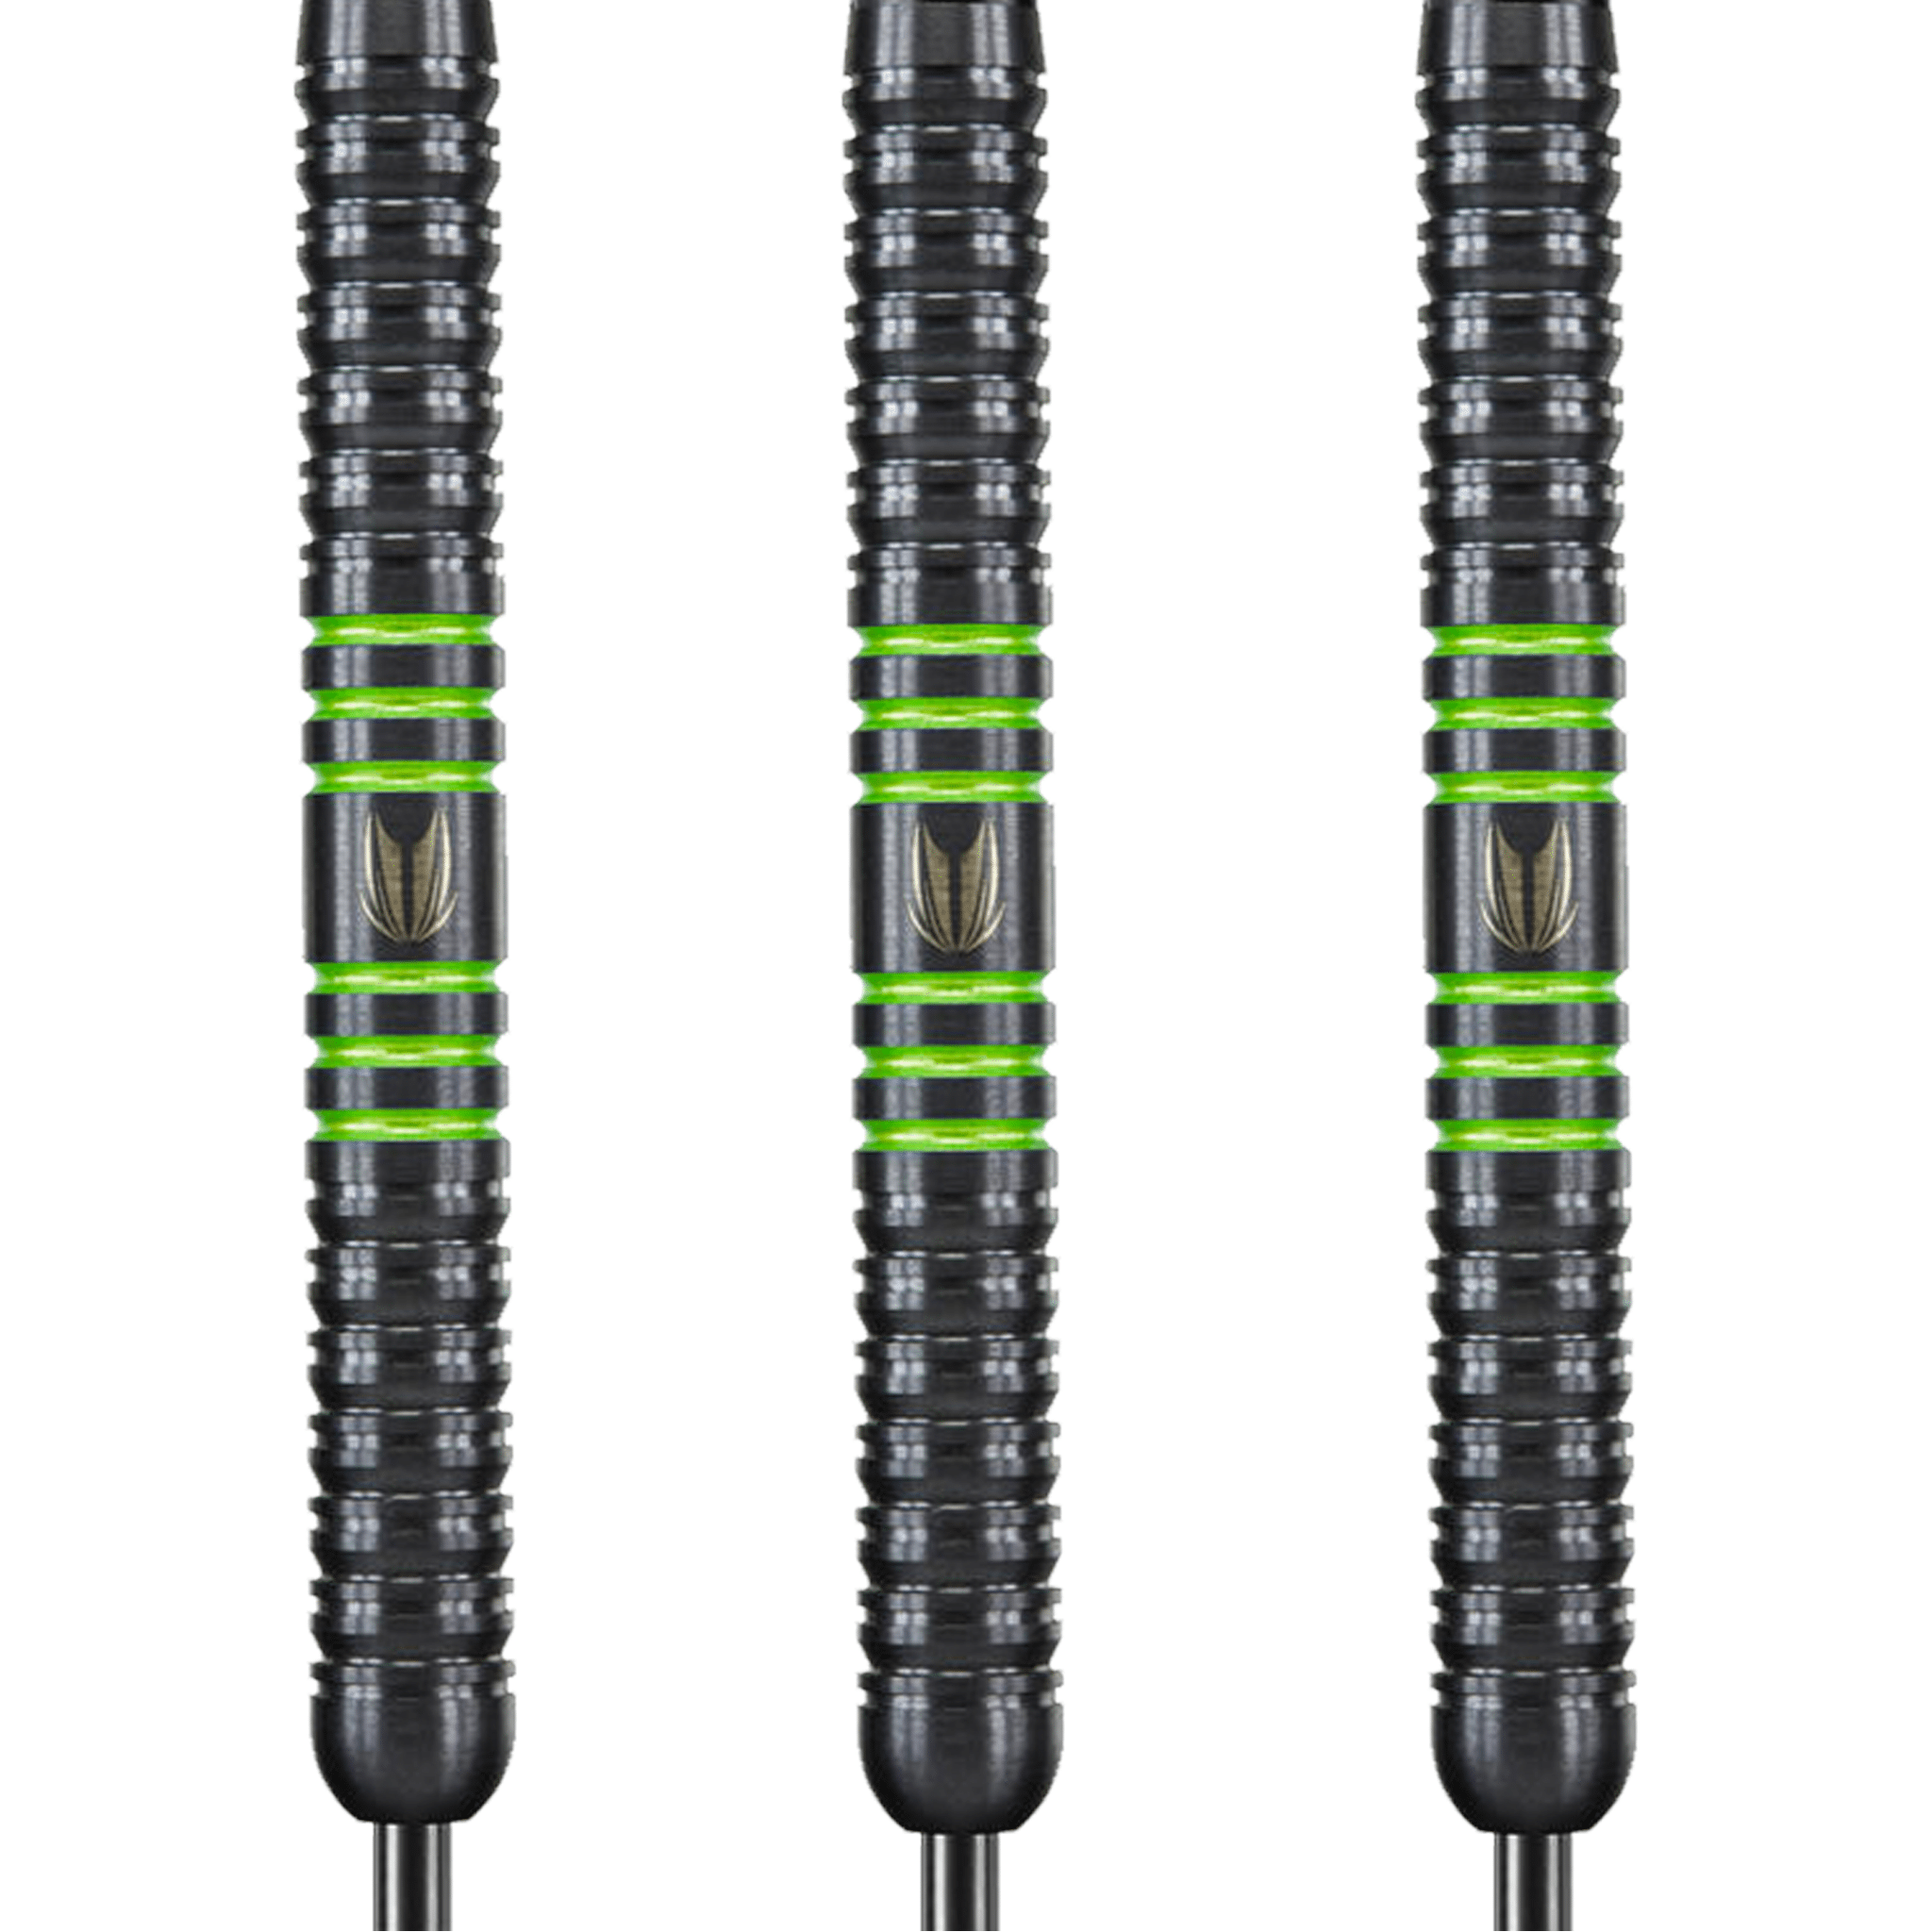 Target Vapor 8 Black & Green - 80% Tungsten Steel Tip Darts Darts